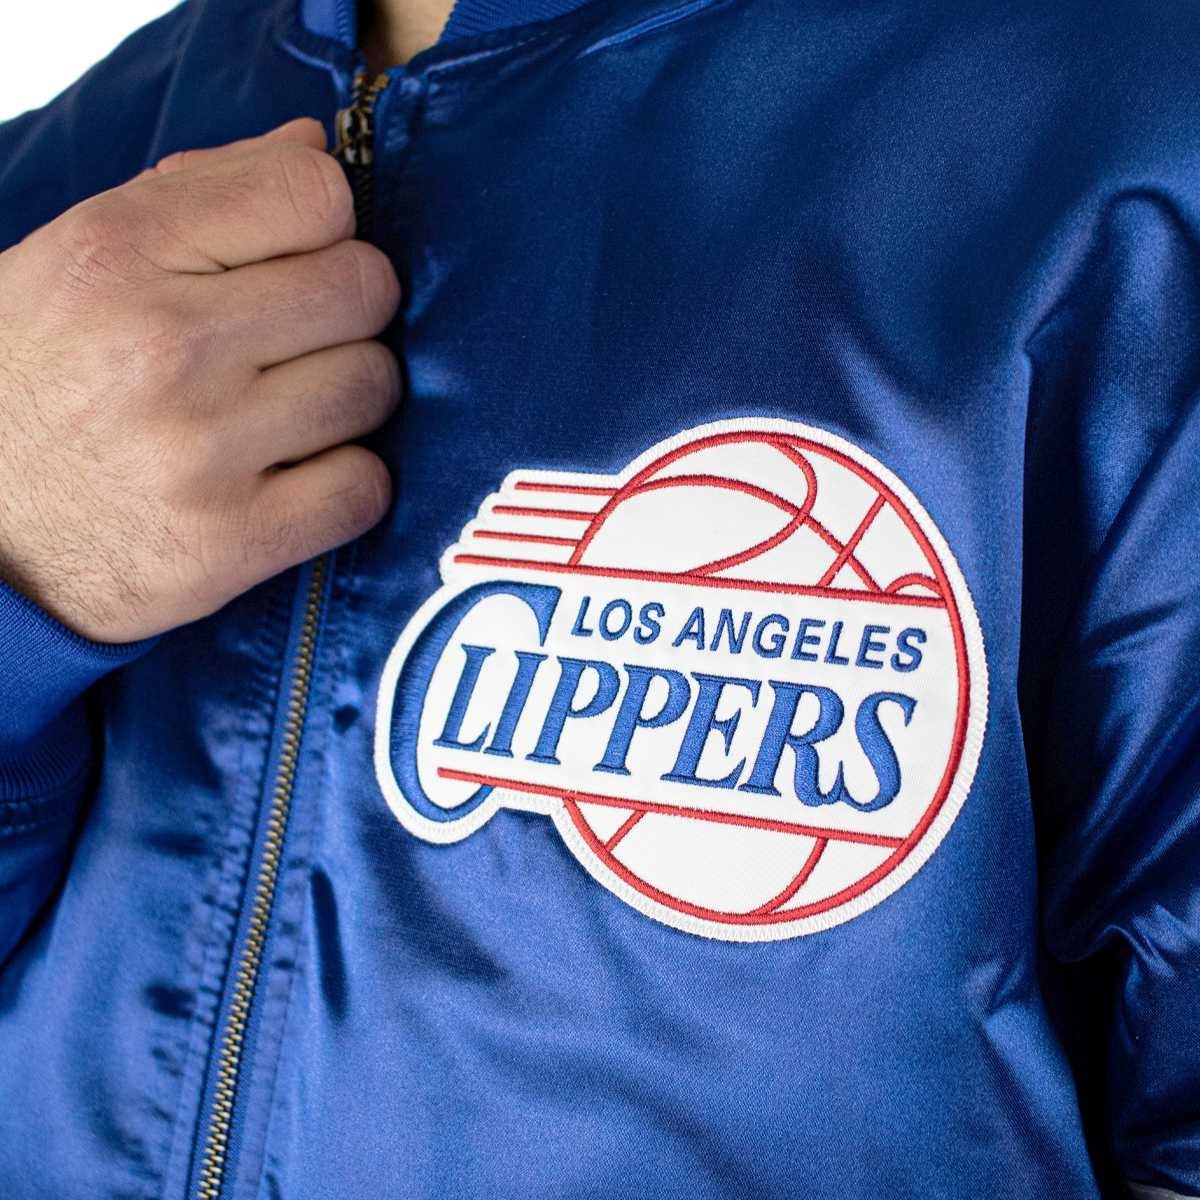 Los Angeles Clippers NBA Heavyweight Satin Jacket